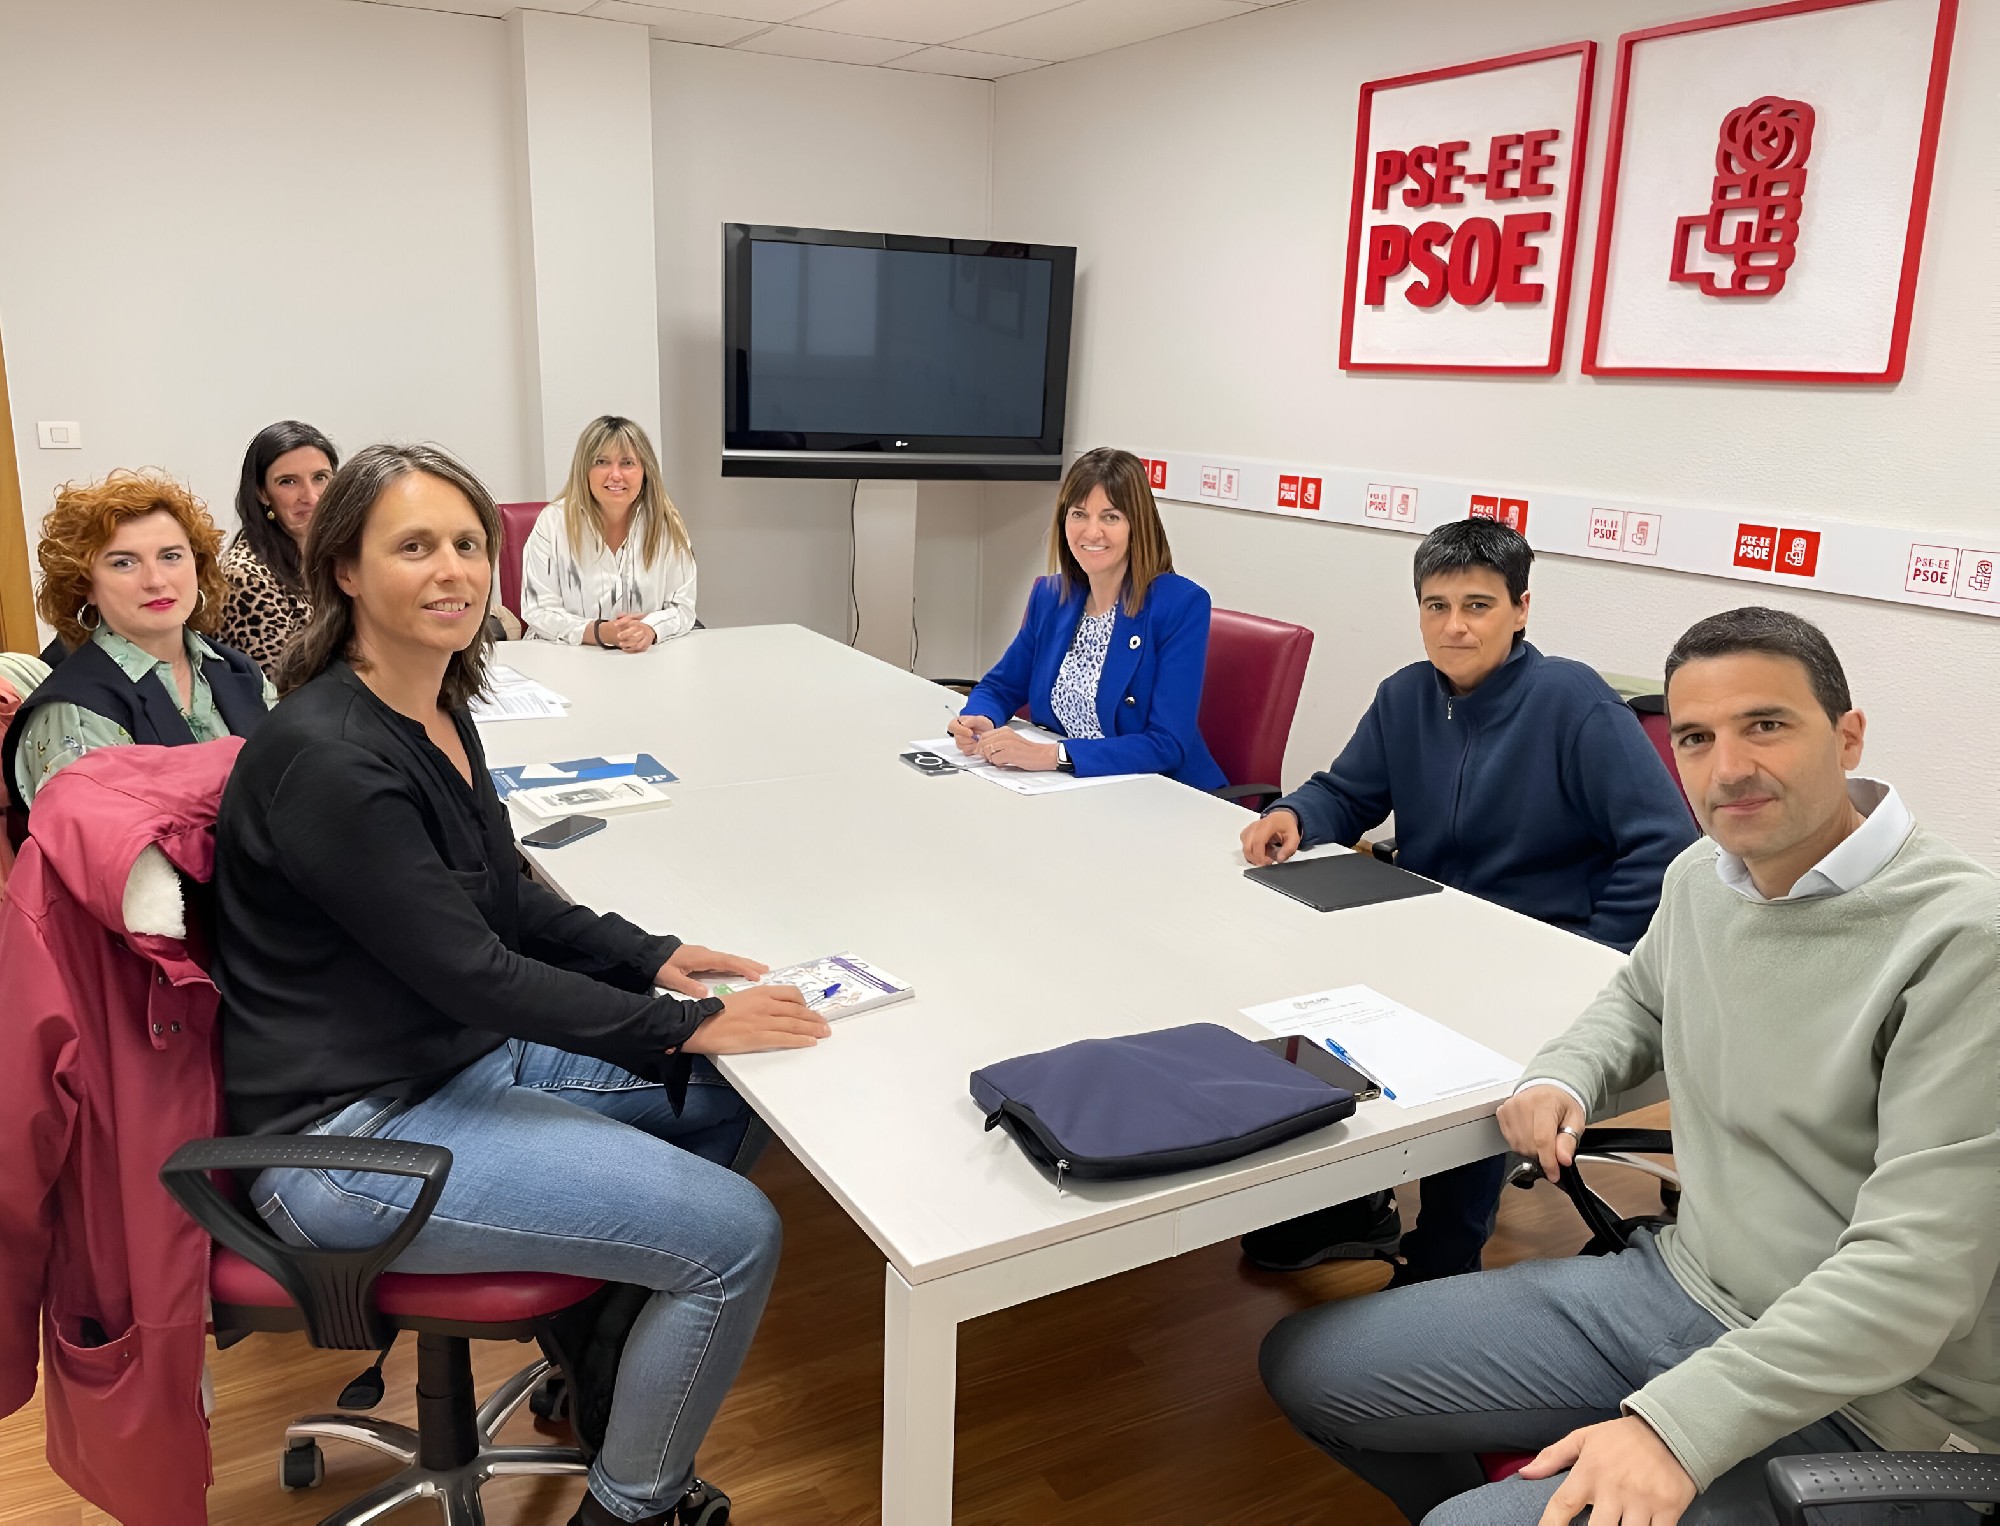 La candidata socialista vasca a las próximas elecciones europeas, Idoia Mendia, junto a representantes de las familias de la economía social en Euskadi | Foto: Socialistas Vascos